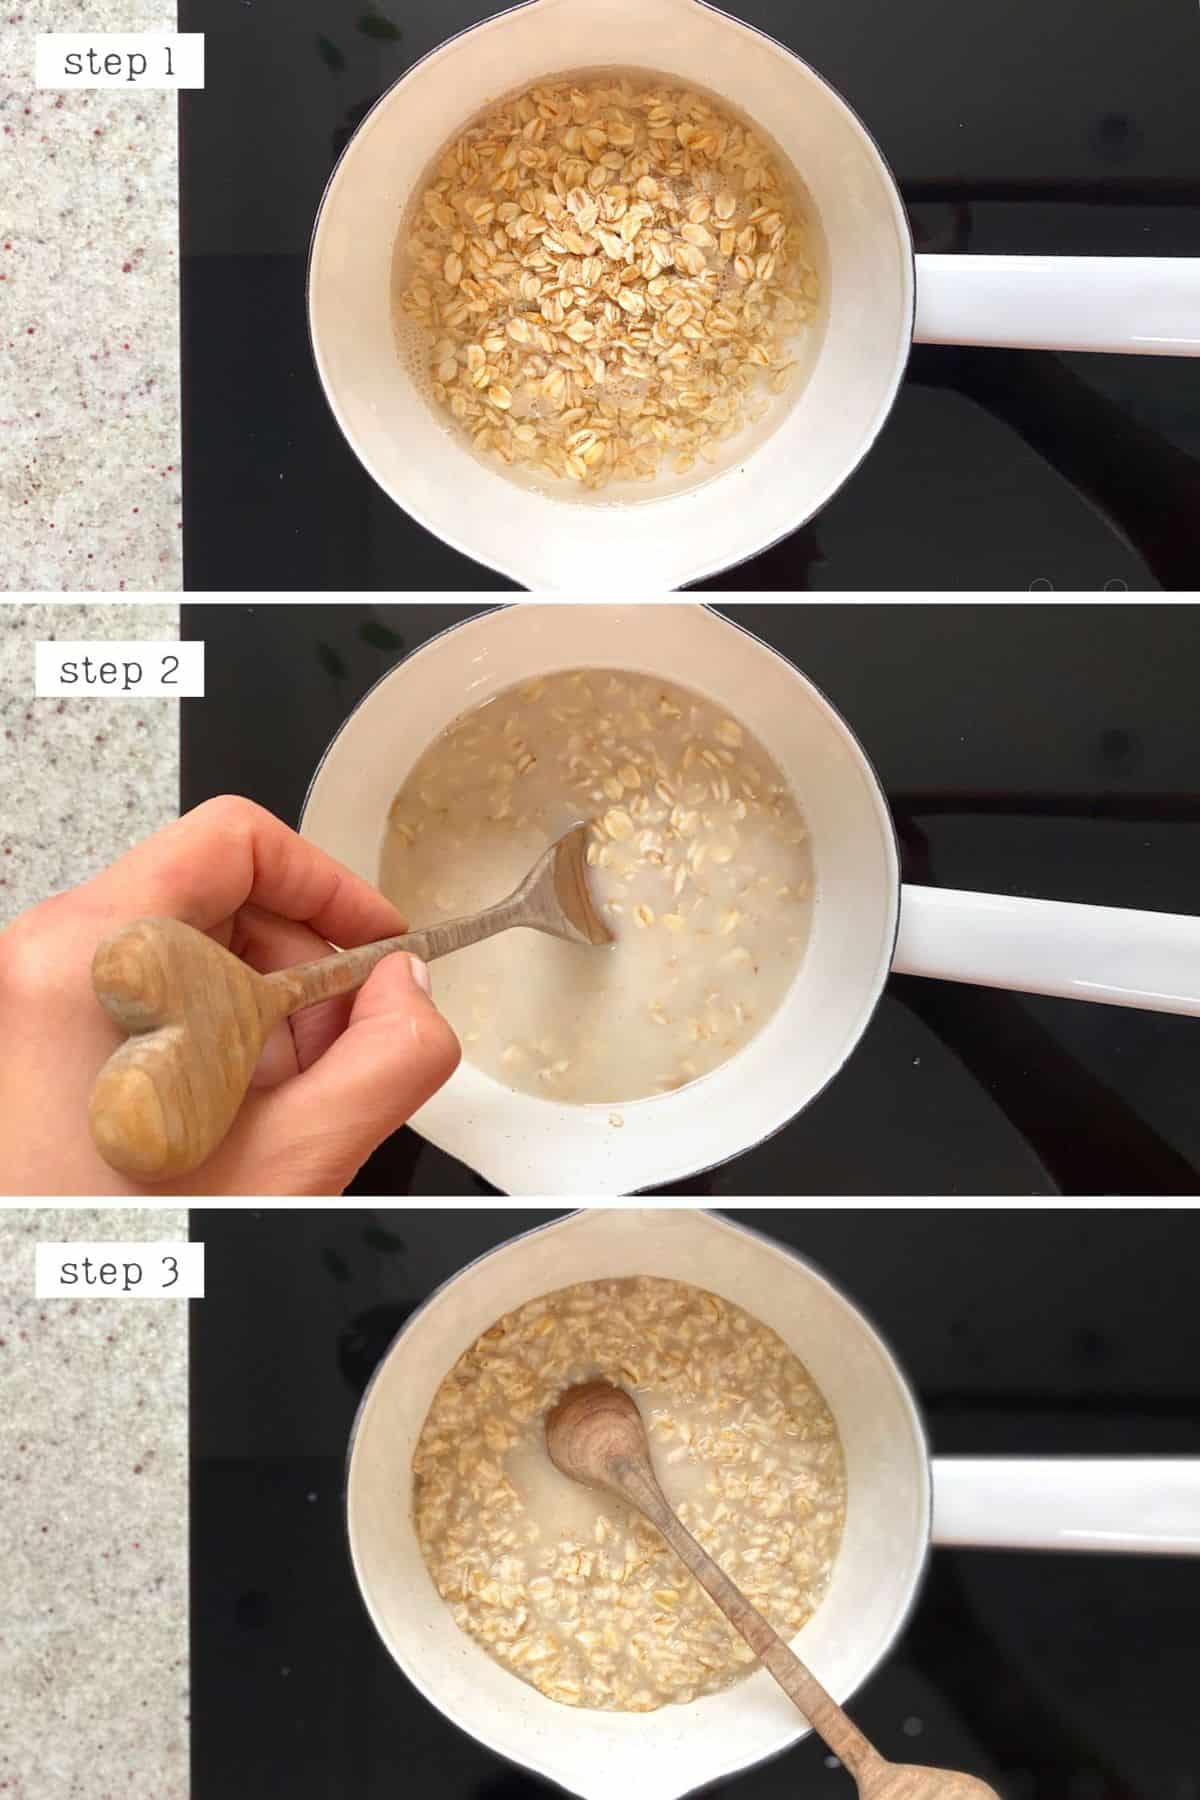 Steps for making oatmeal